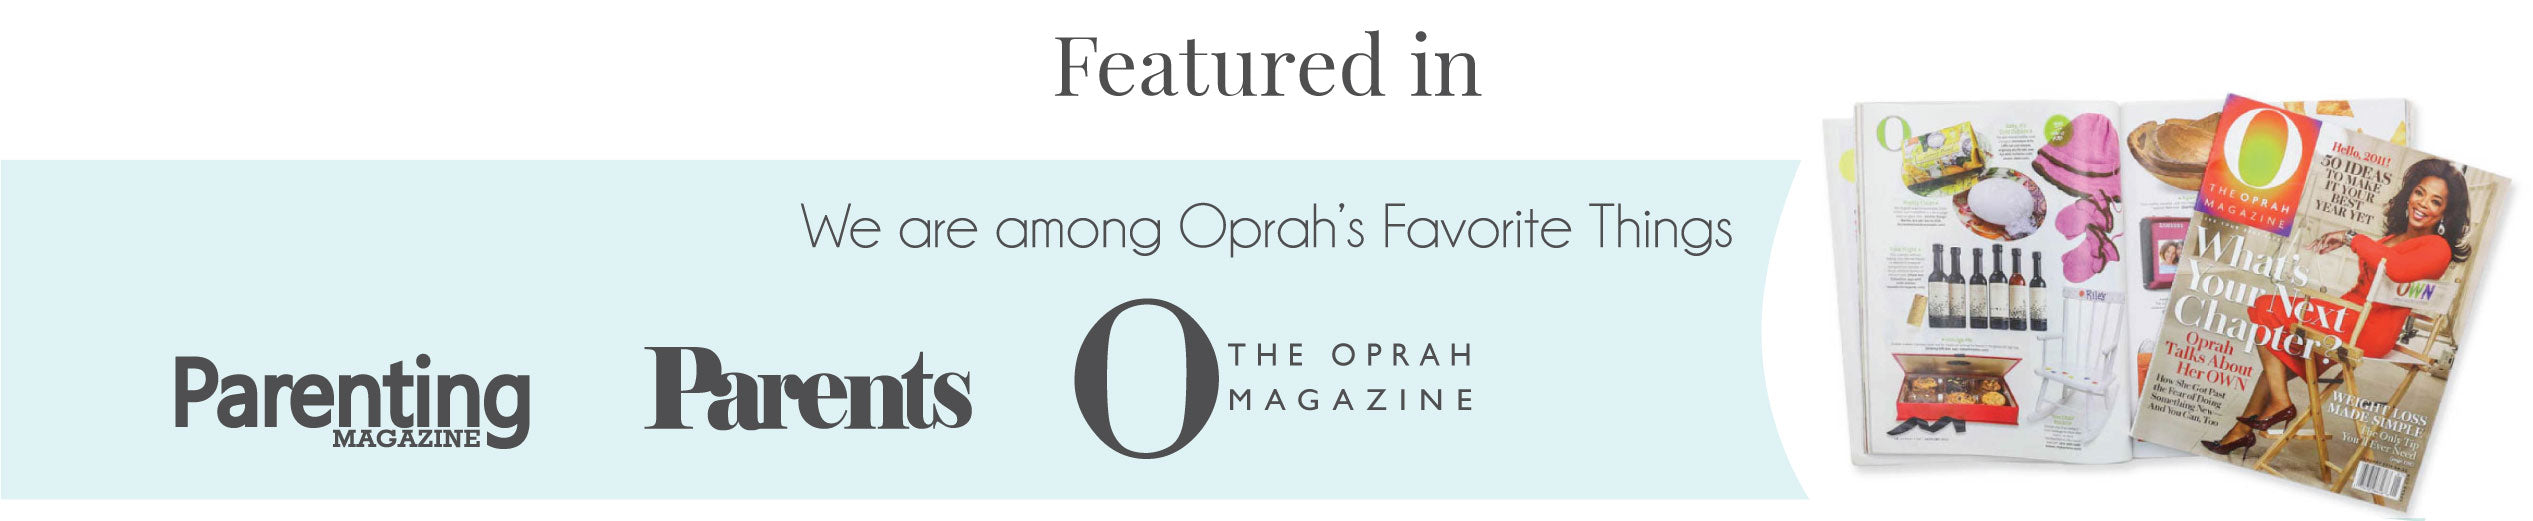 As seen in O magazine as Oprah's favorite things